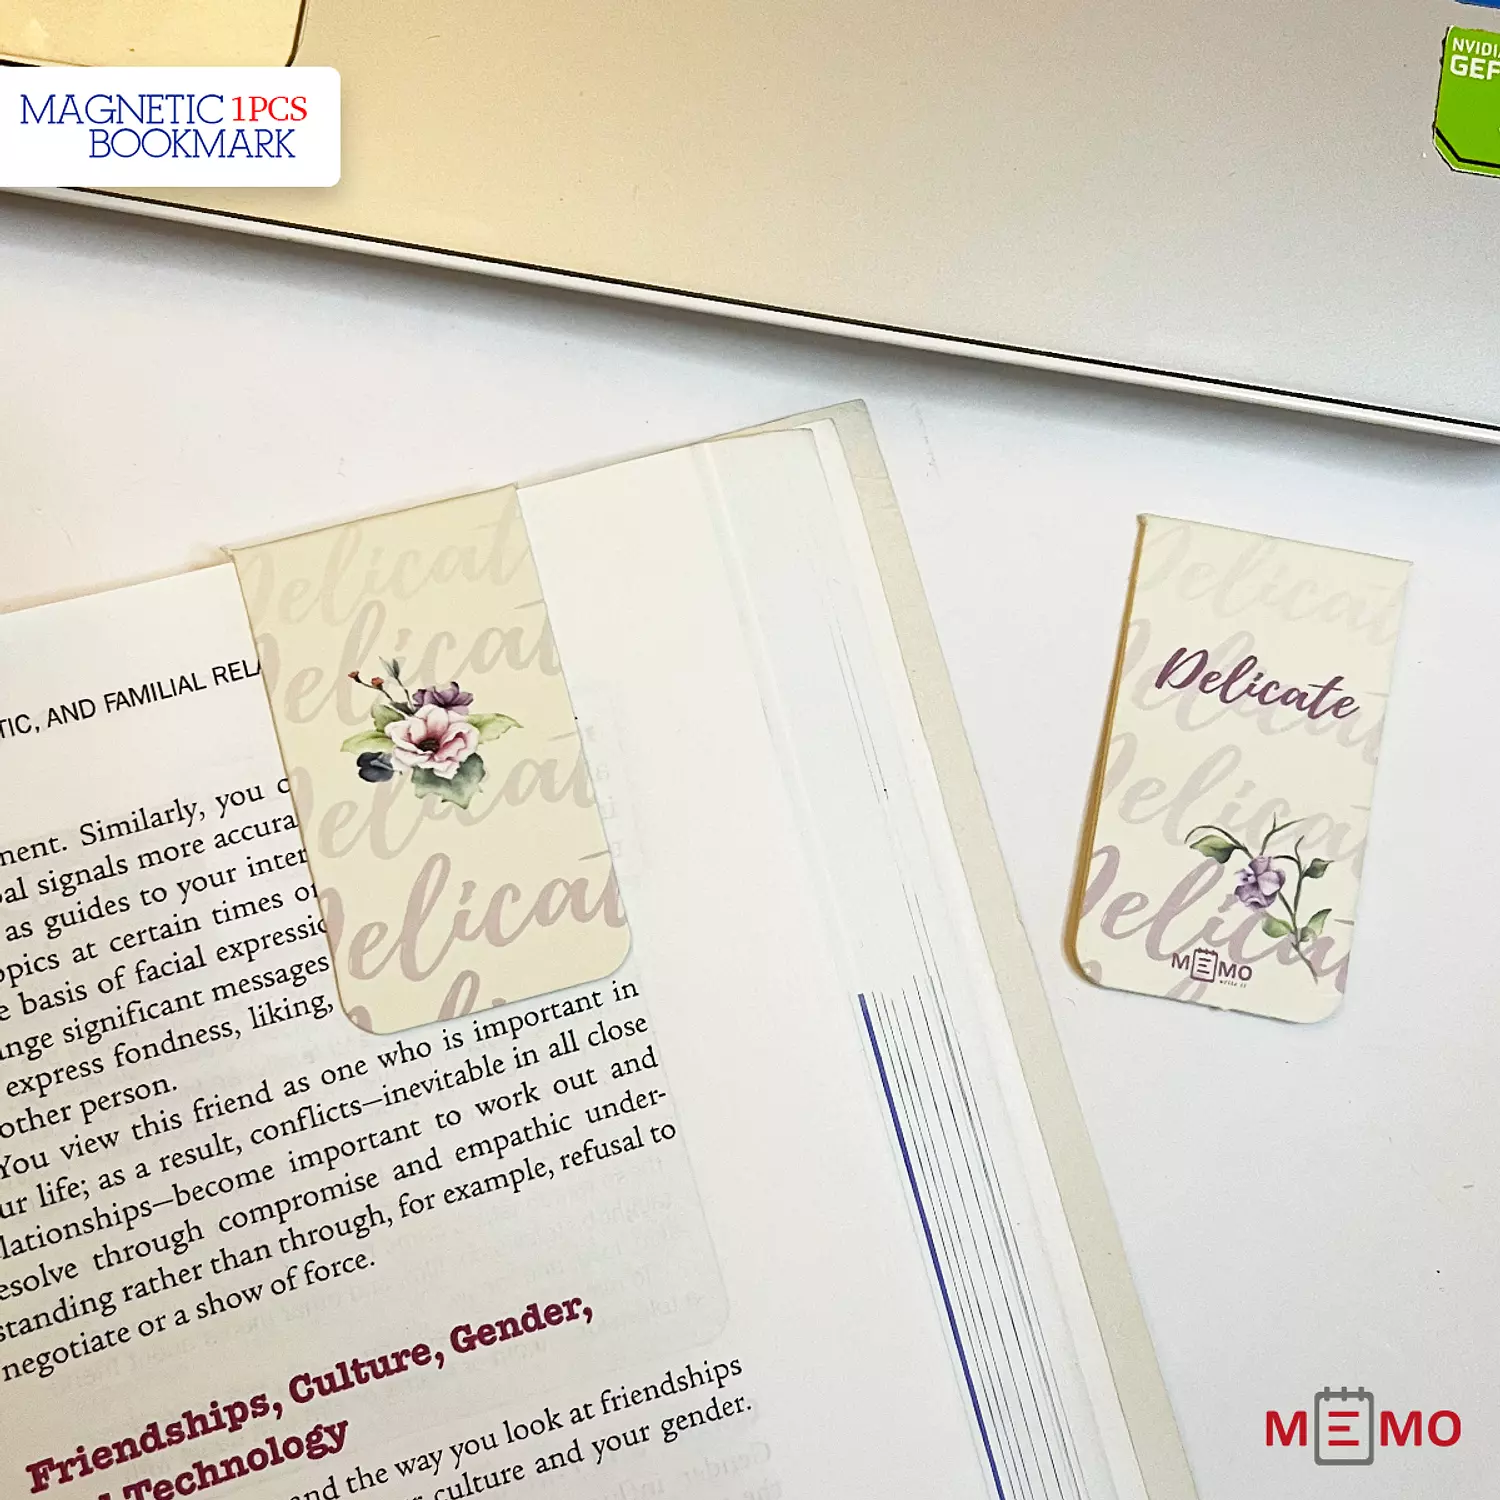 Memo Magnetic Bookmark “delicate”2 (1 pcs)  -2nd-img